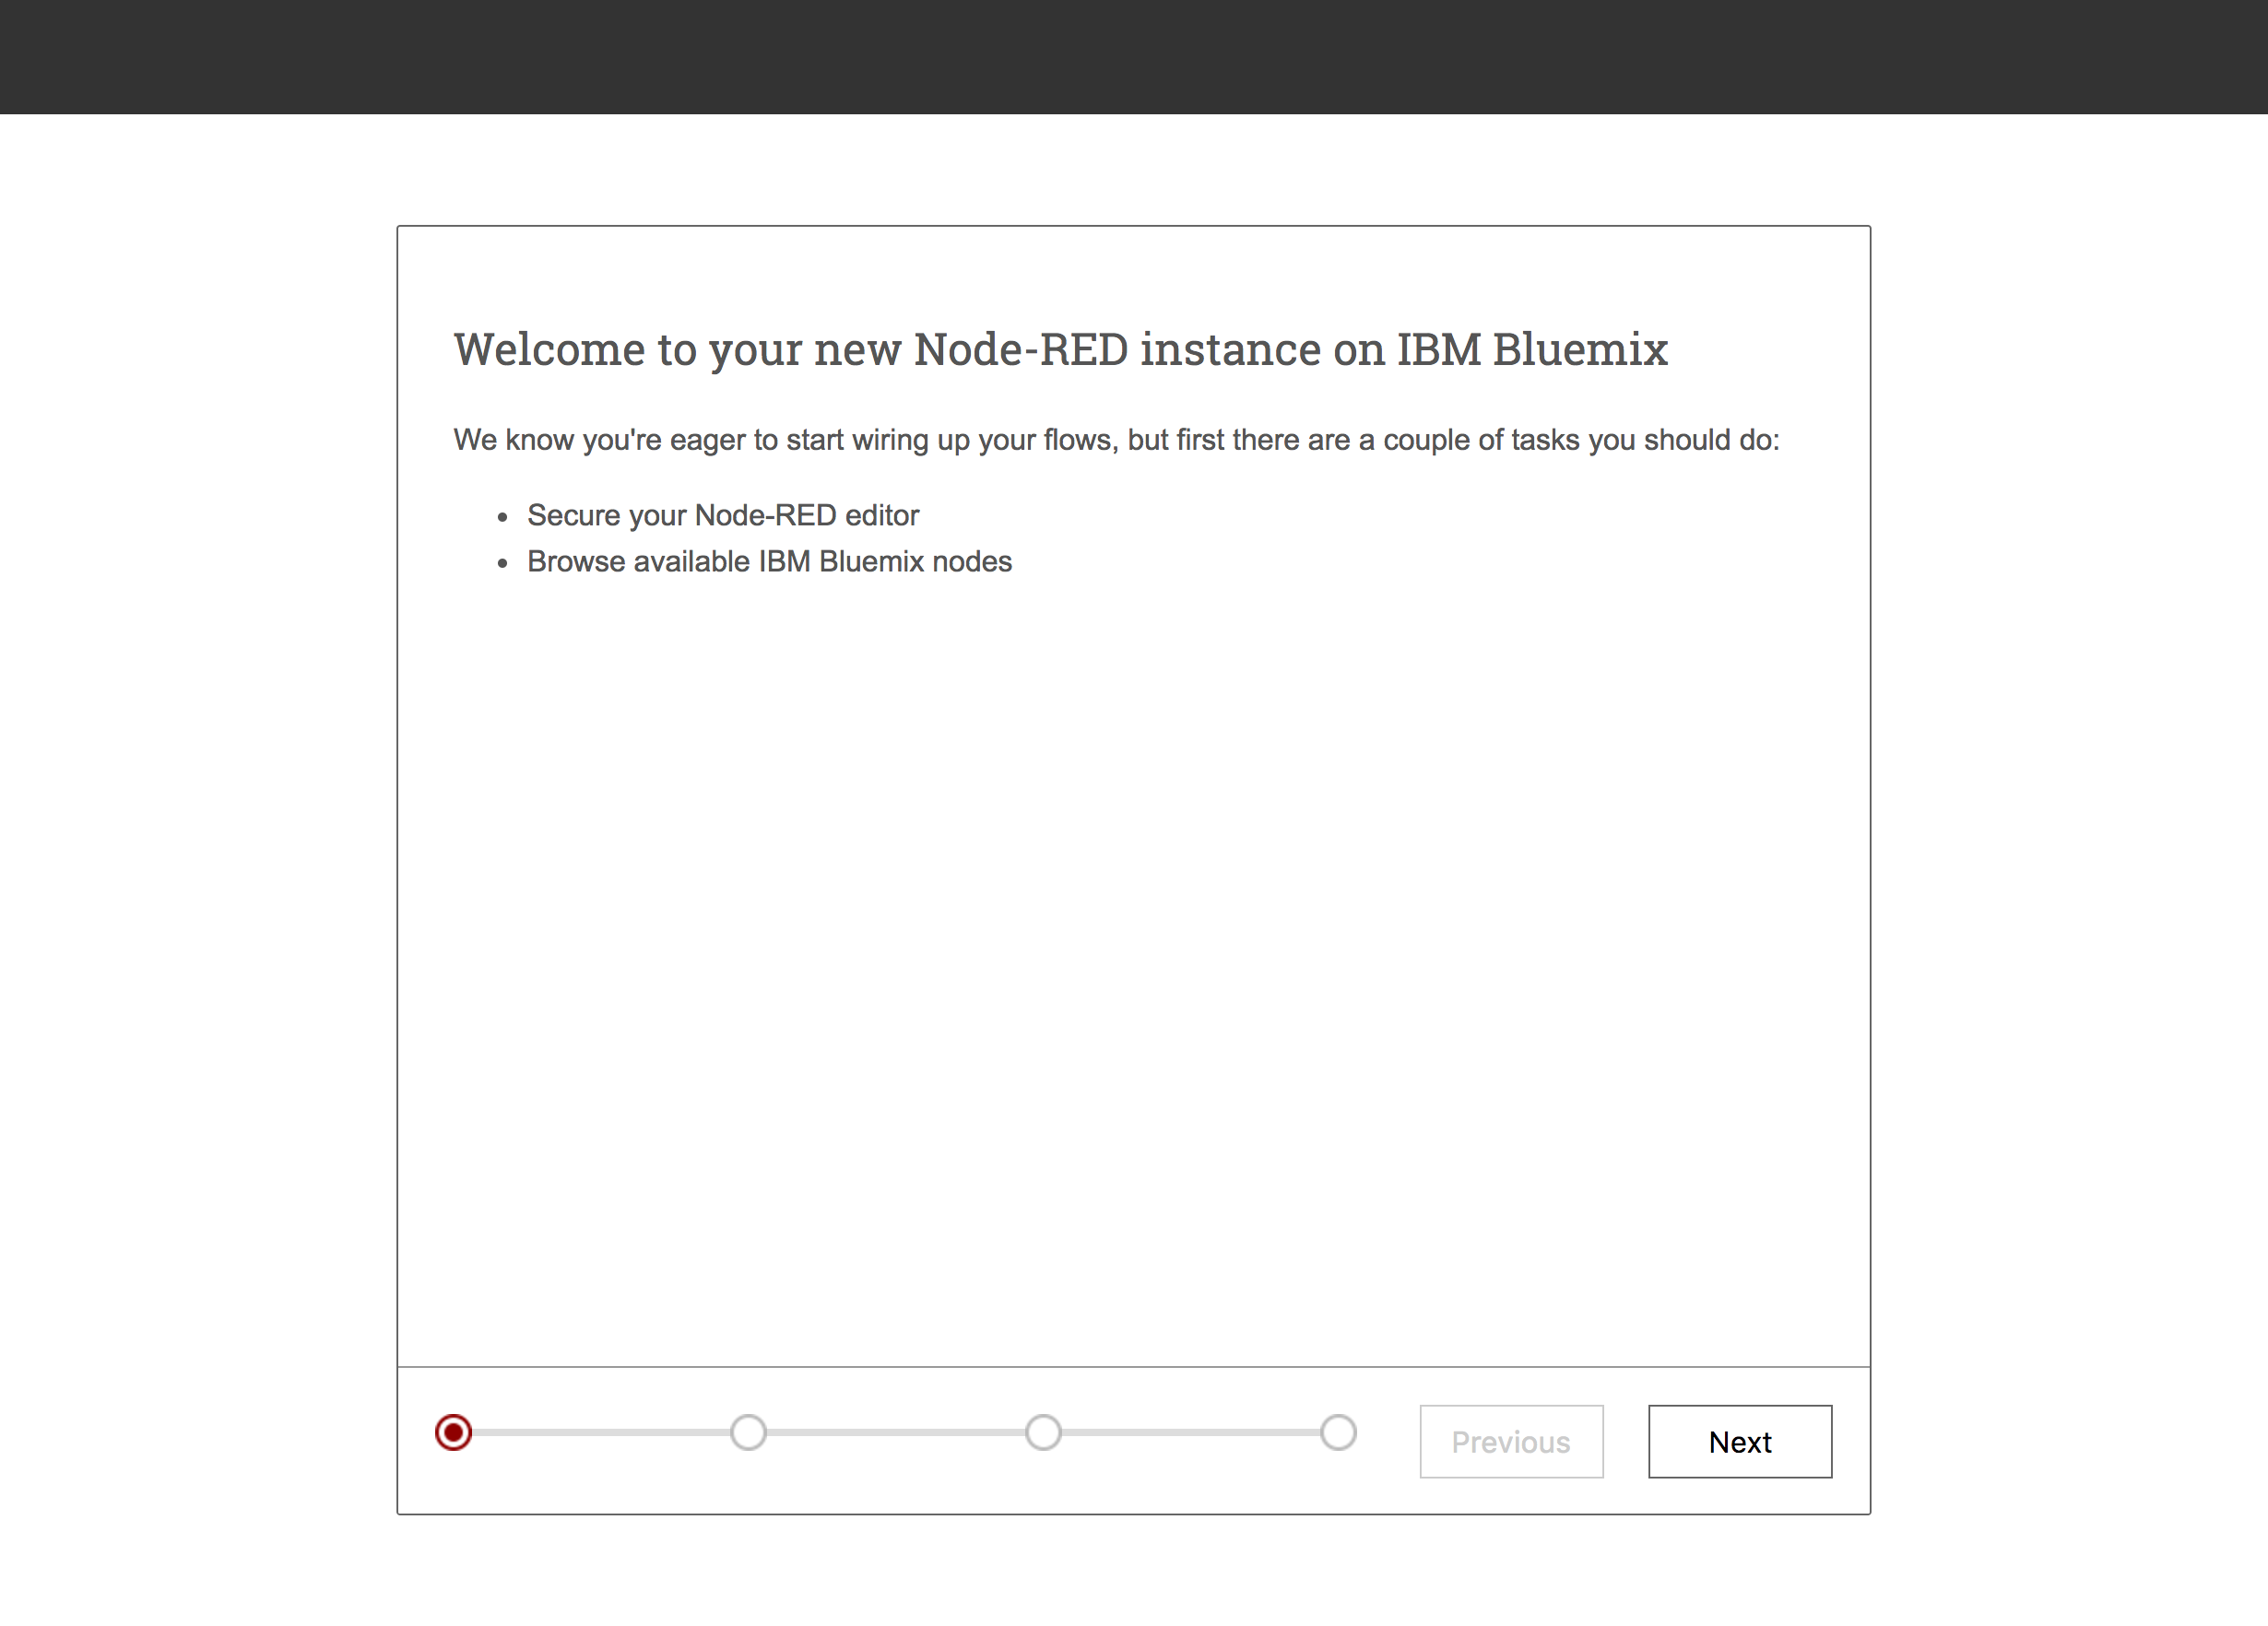 FireShot Capture 9 - Node-RED in IBM Bluemix - https___y-someya.au-syd.mybluemix.net_.png